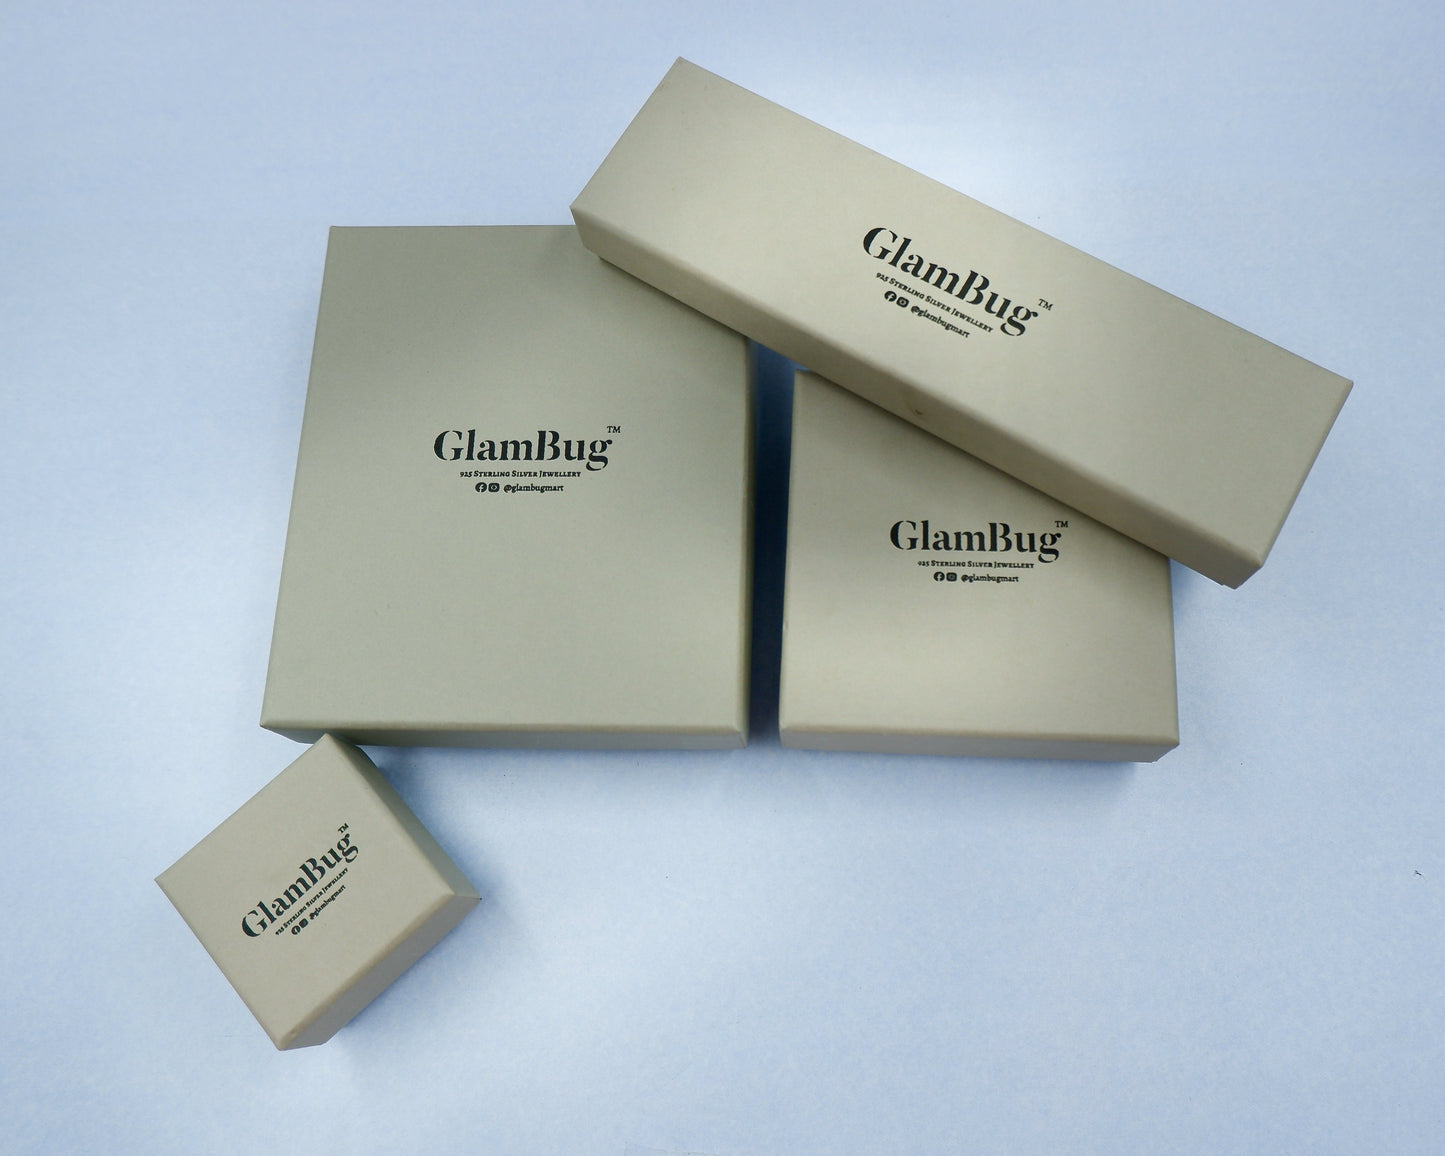 GlamBug 925 Sterling Silver | ButterFly Inspired Luxury Premium Earrings | Swiss Zircon Studded | GBRPZE02-42 | RoseGold - Glambug 925 Silver Jewellery